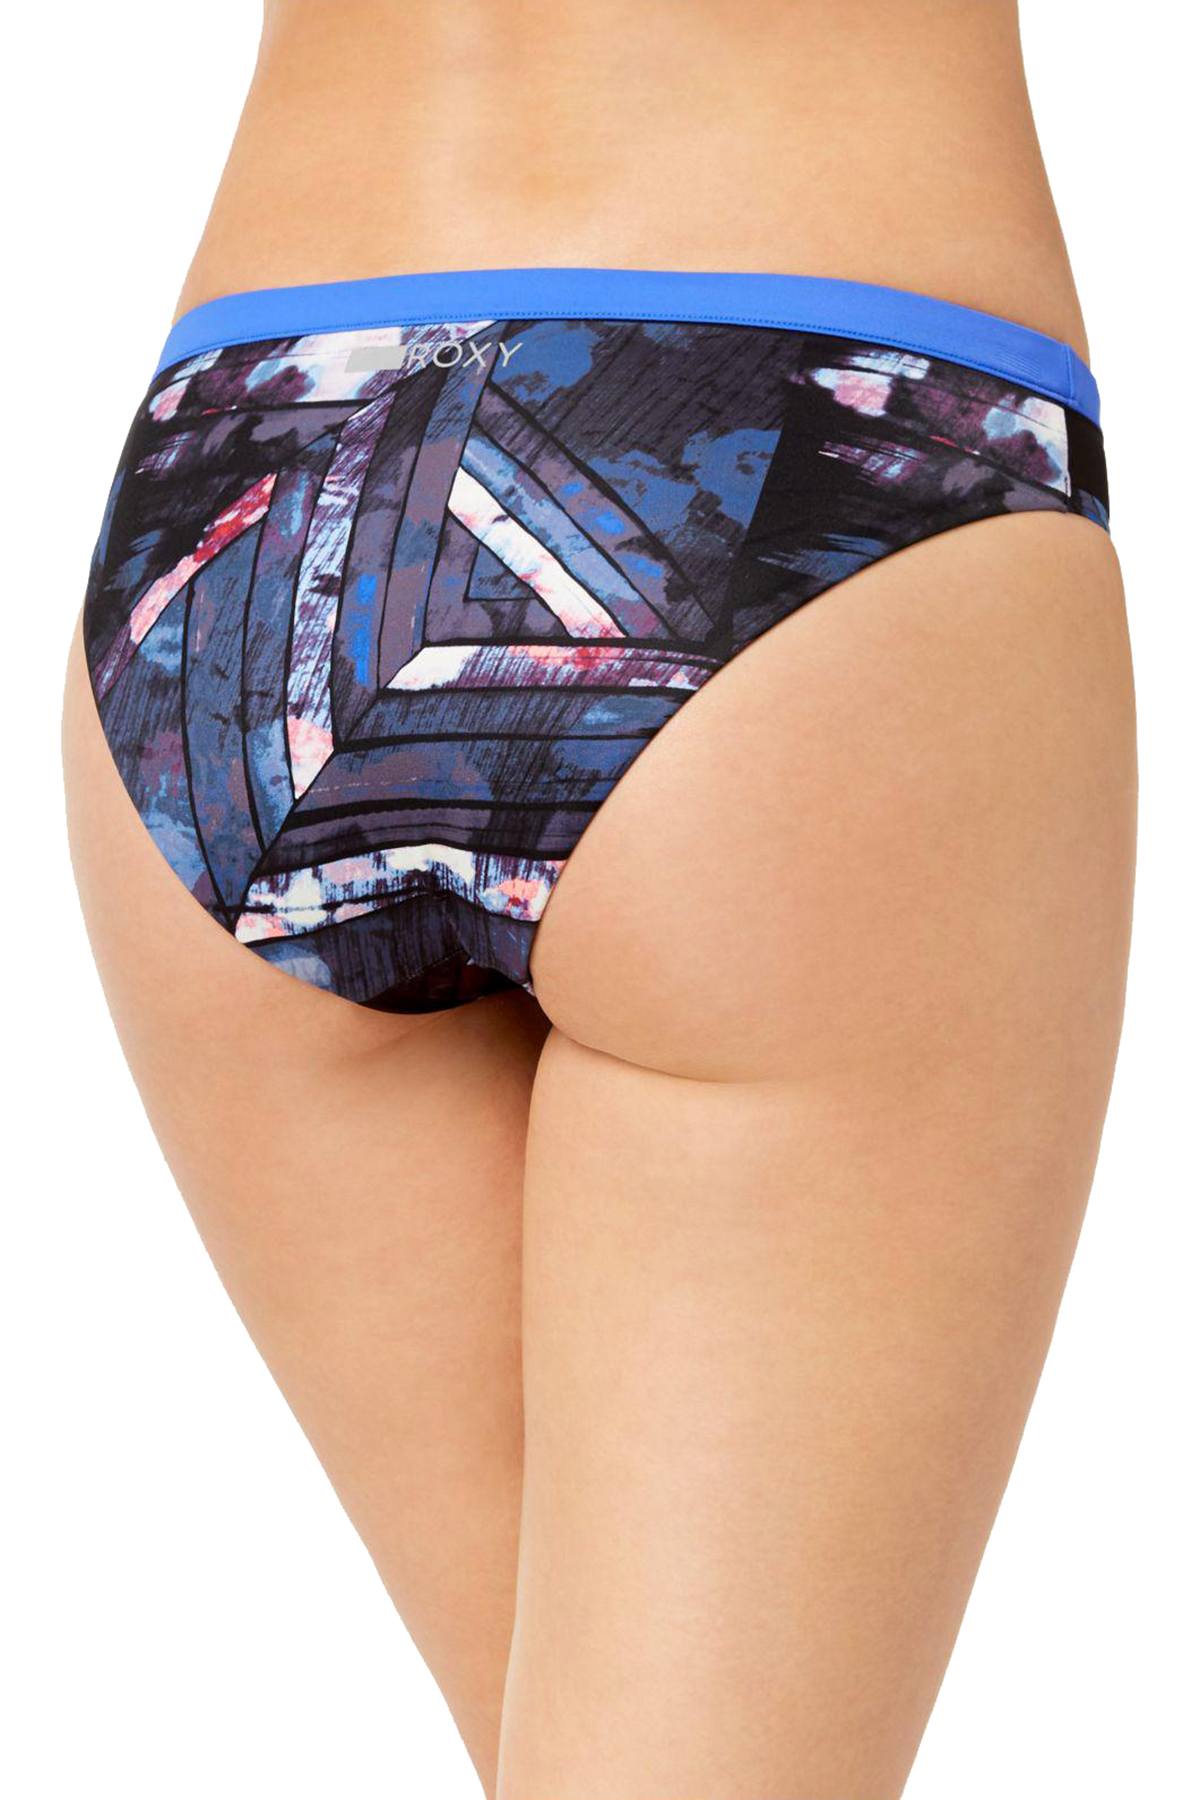 Roxy 'Keep It Scooter' Mesh Side Bikini Bottom in Anthracite Blur Paint